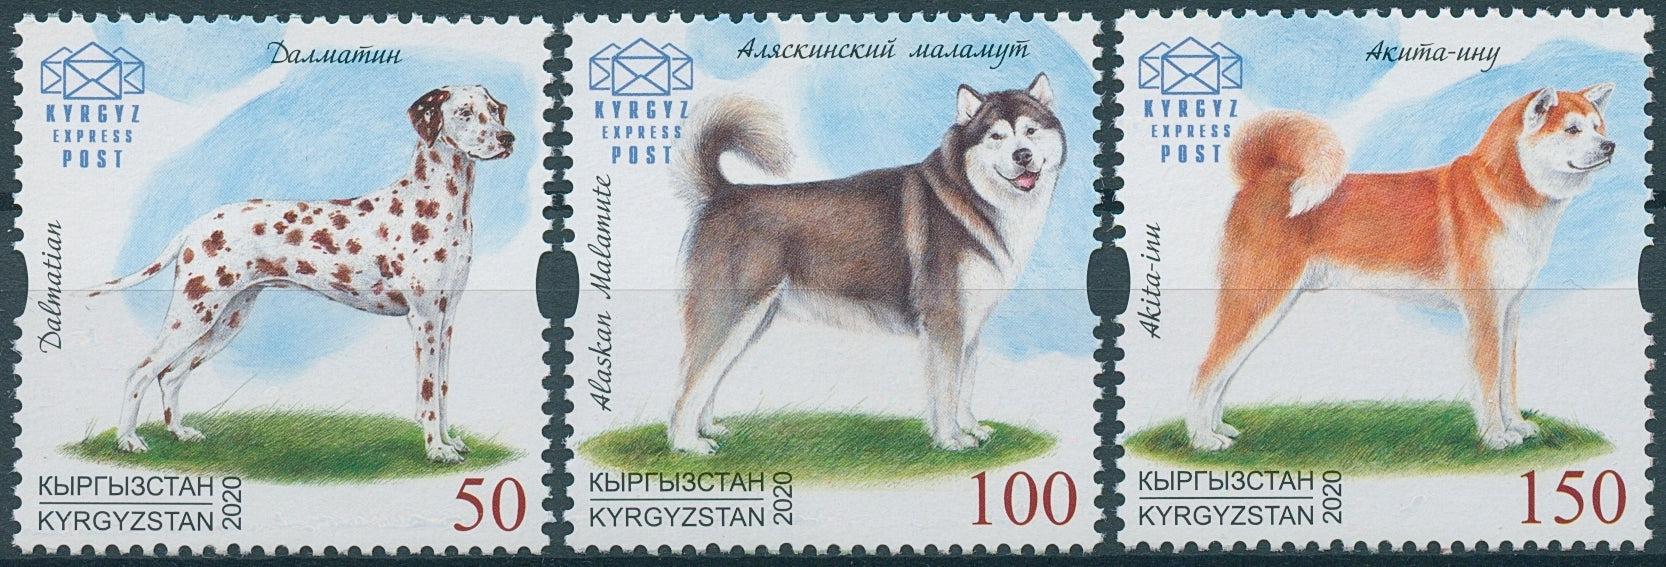 Kyrgyzstan KEP Dogs Stamps 2020 MNH Dalmatians Alaskan Malamute Akita-Inu 3v Set